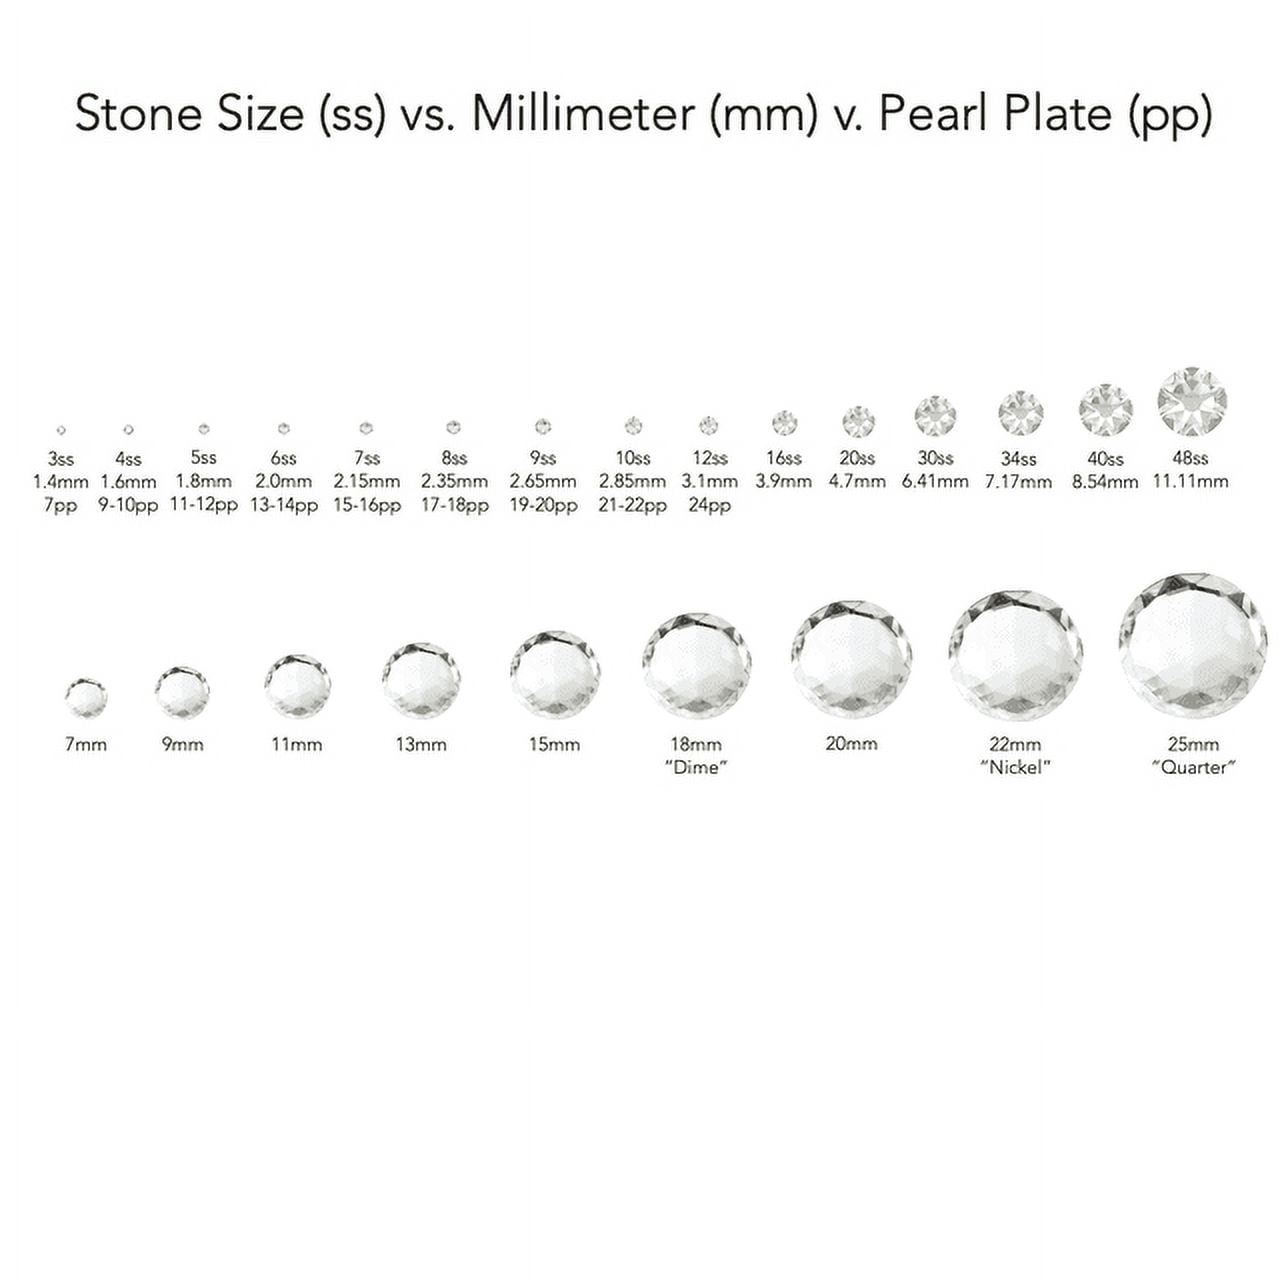 John Bead Acrylic Round Flat Back Rhinestones 12mm (ss50) Crystal 400Pcs/Bag - Black